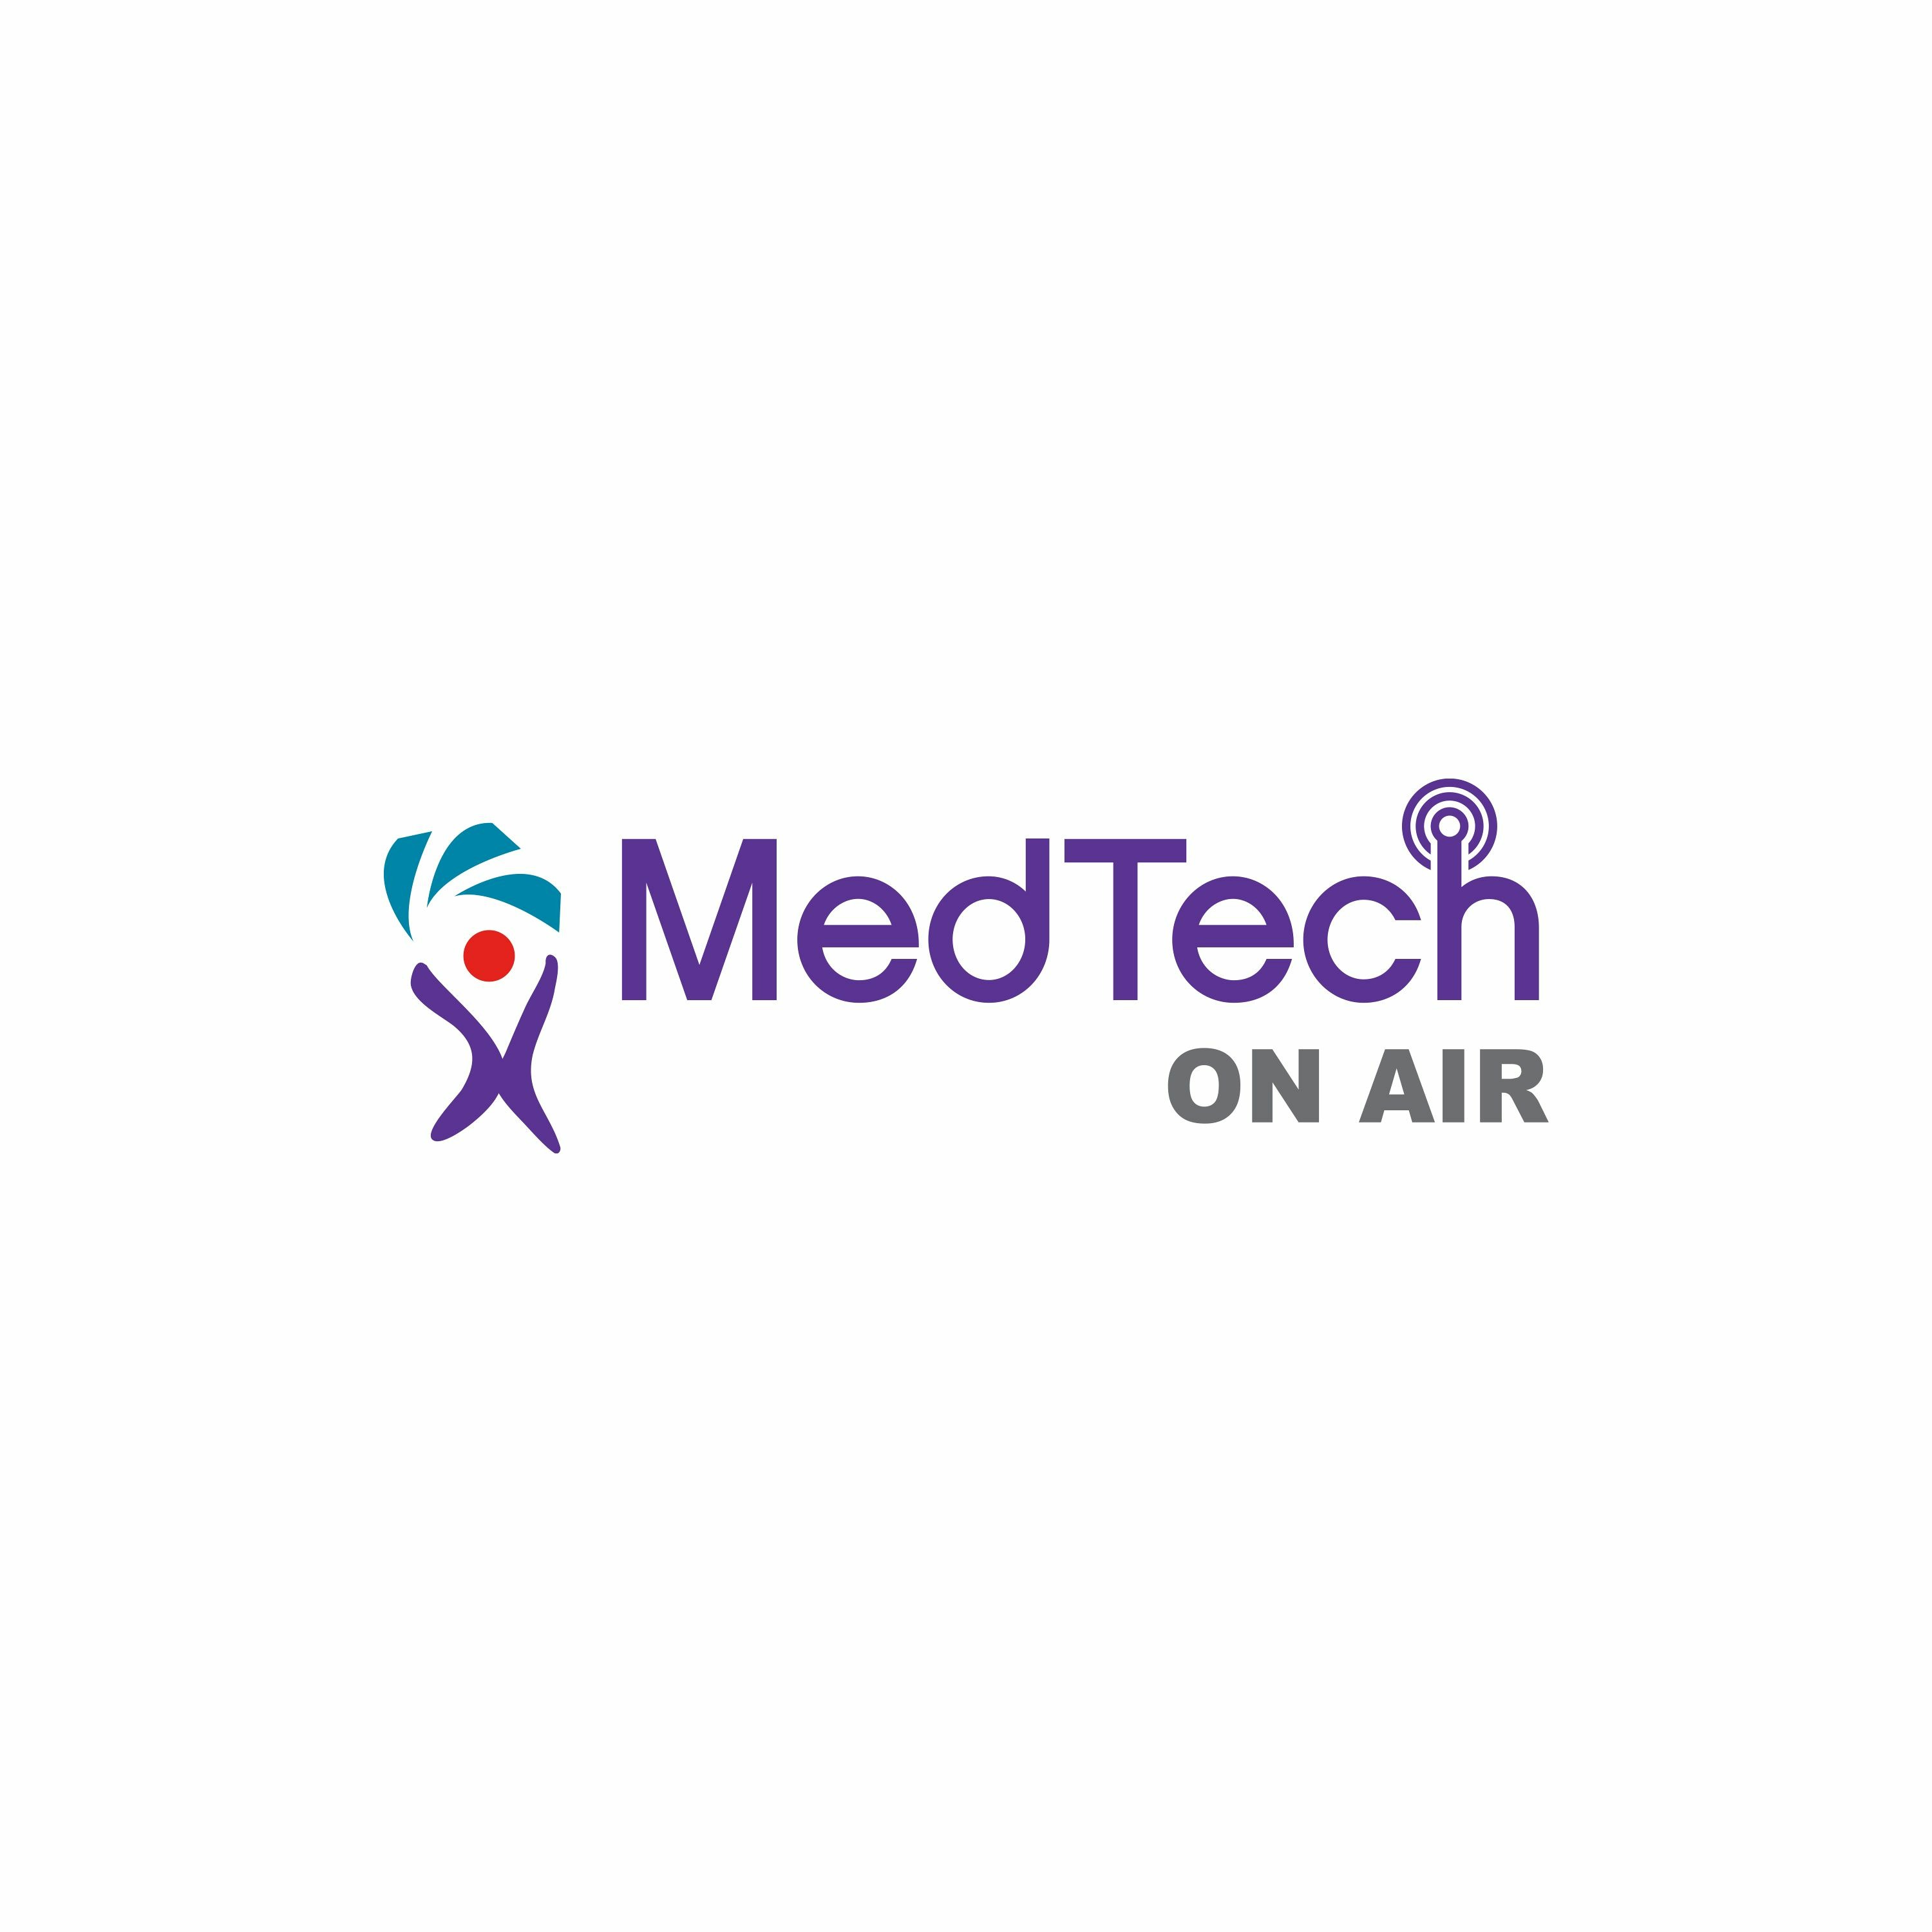 MedTech ON AIR - Teaser